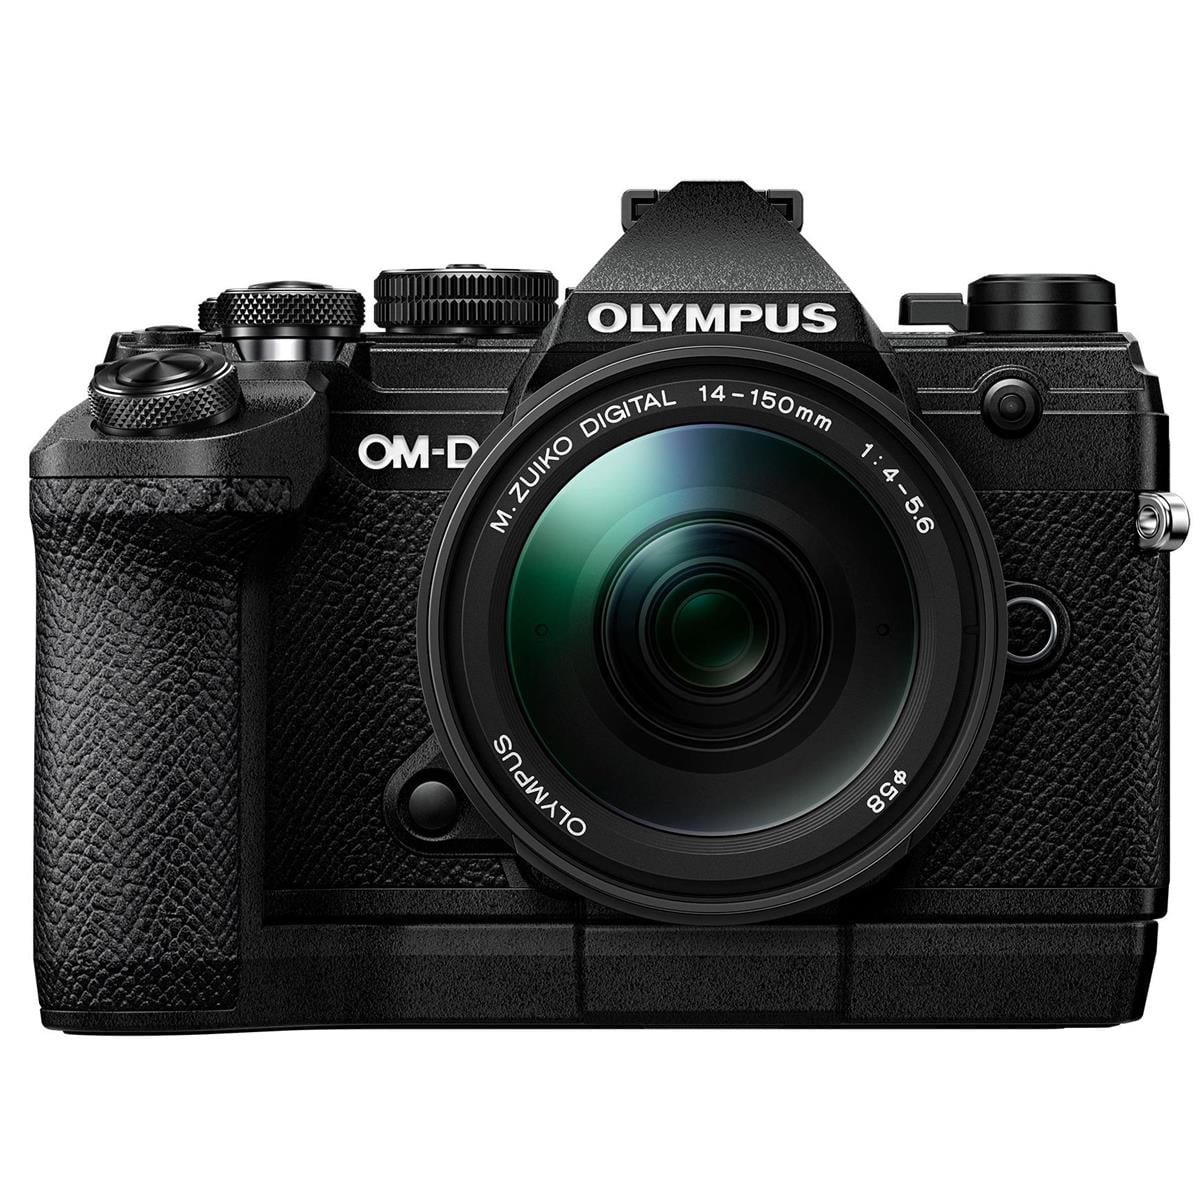 Geladen Merg ritme Olympus OM-D E-M5 Mark III Mirrorless Digital Camera Body, Silver - with  Olympus ECG-5 External Metal Grip - Walmart.com